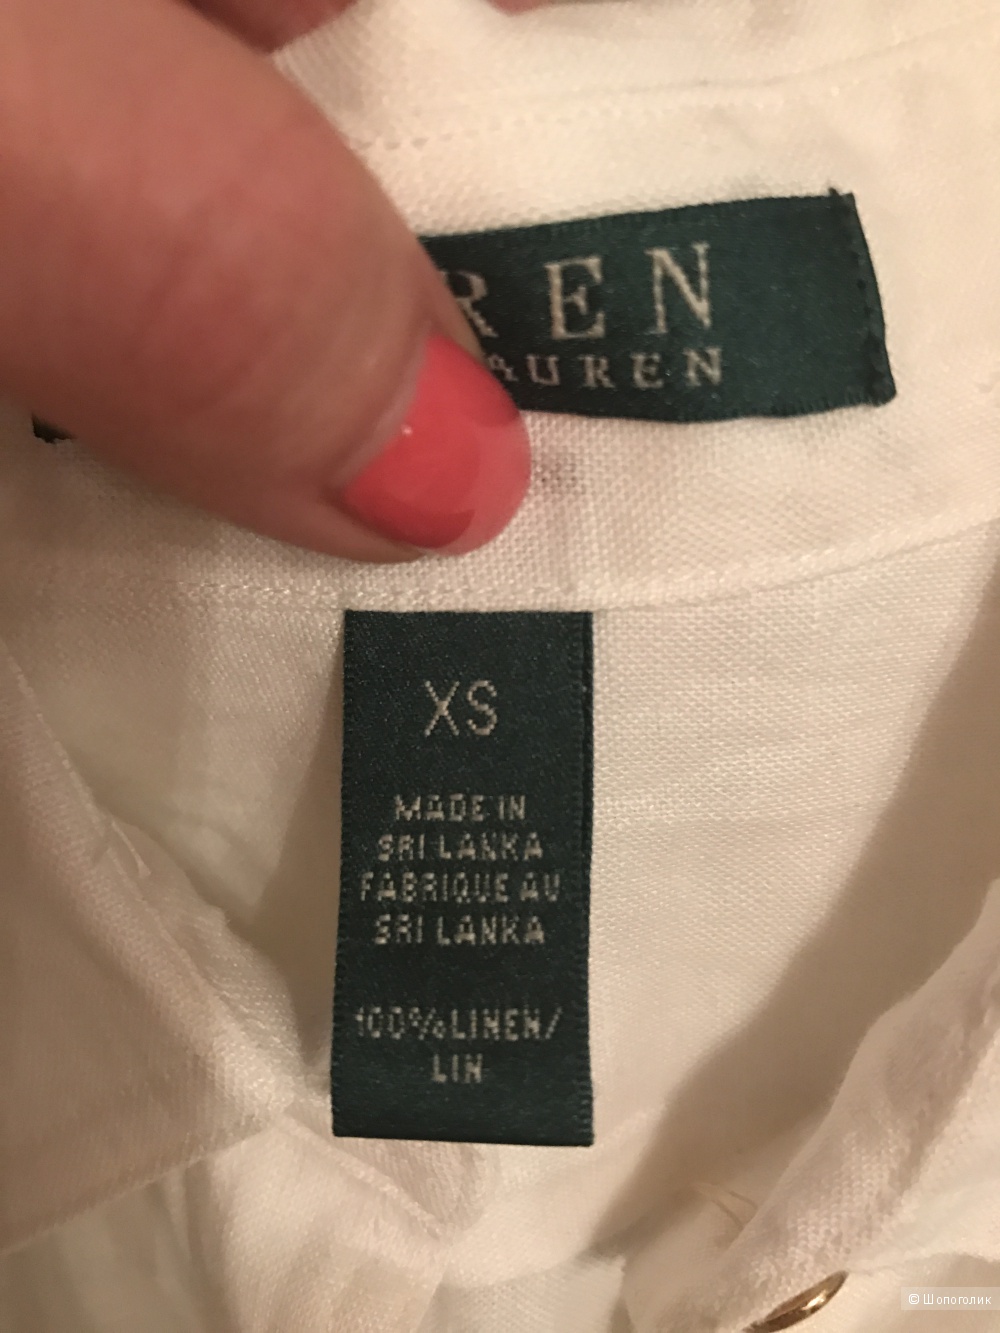 Рубашка белая Ralph Lauren, 100% лен, размер XS, новая